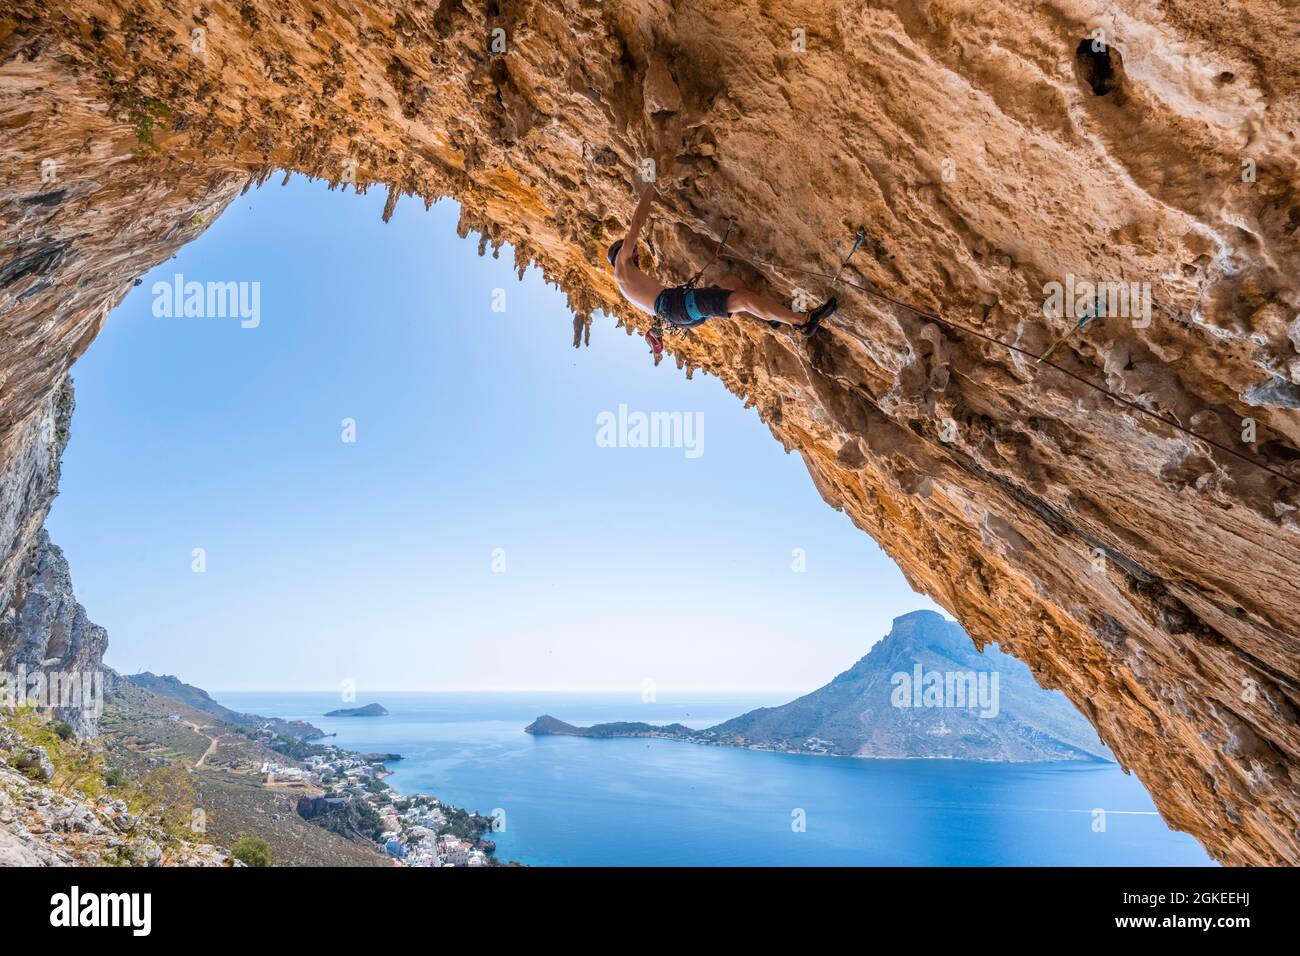 Grande Grotta, settore Armeos, alpinismo, arrampicata sportiva, Kalymnos, Dodecanese, Grecia Foto Stock